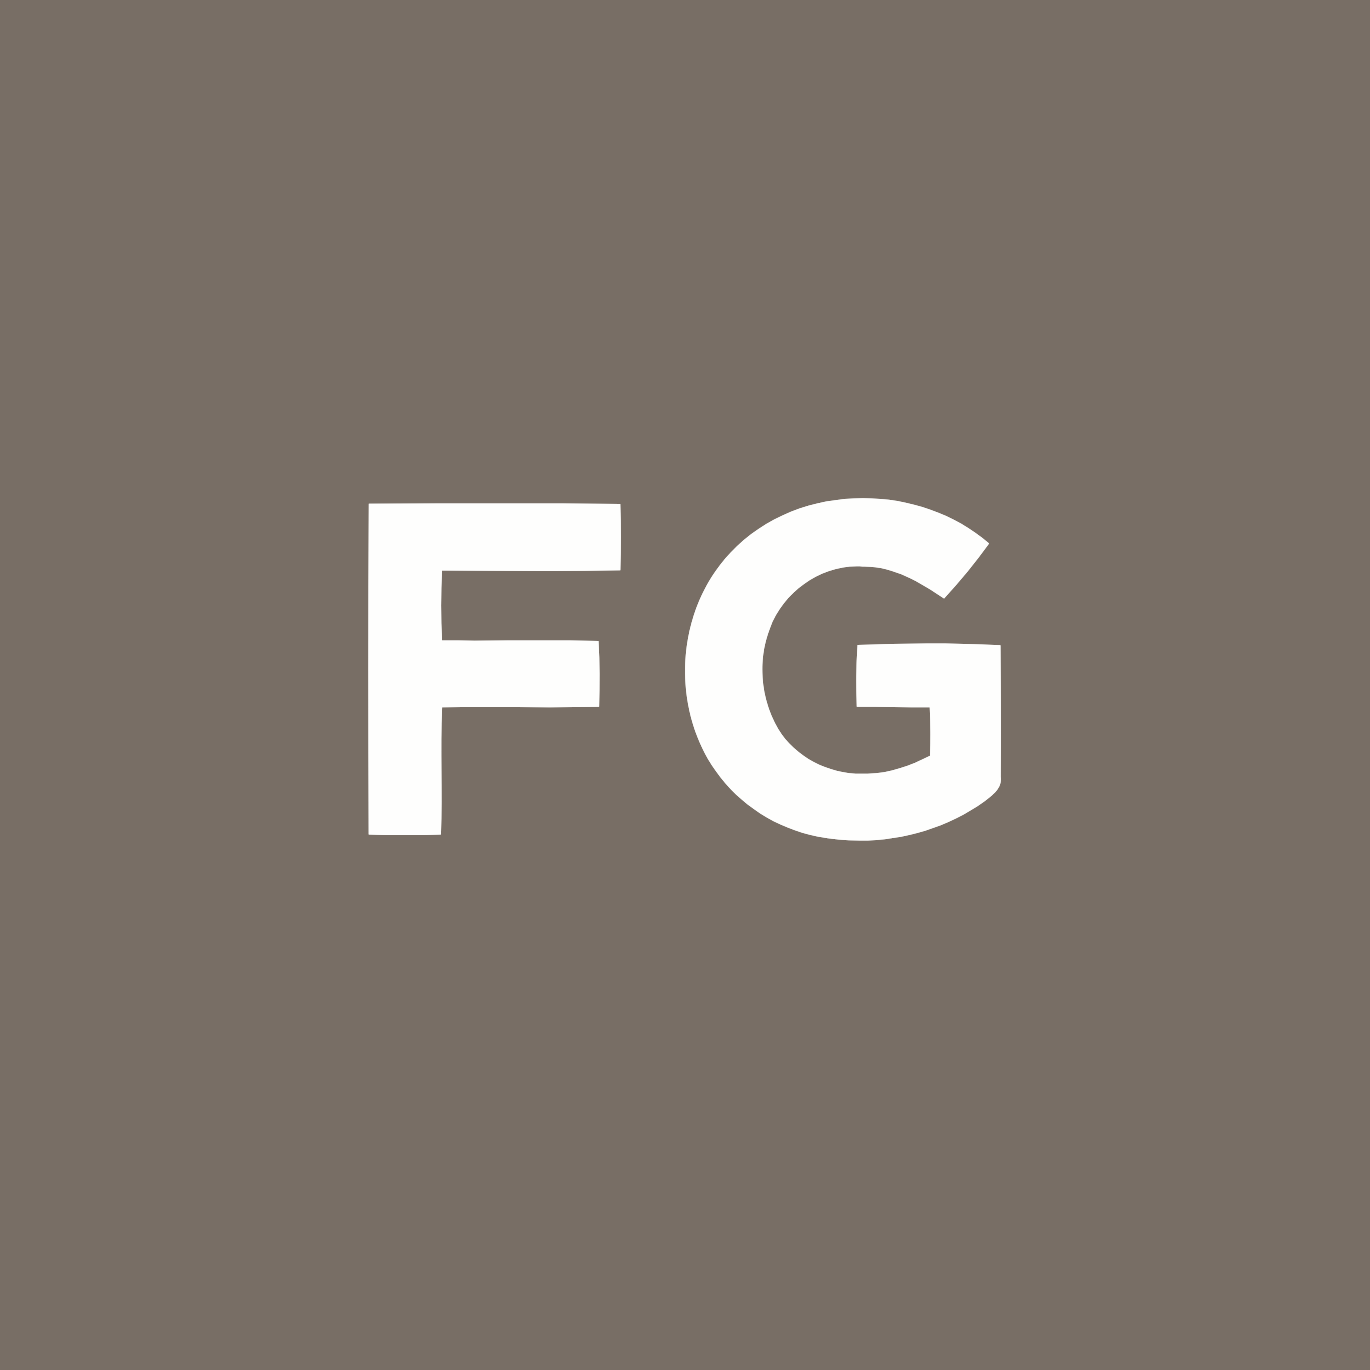 Fossil Group logo (PNG transparent)